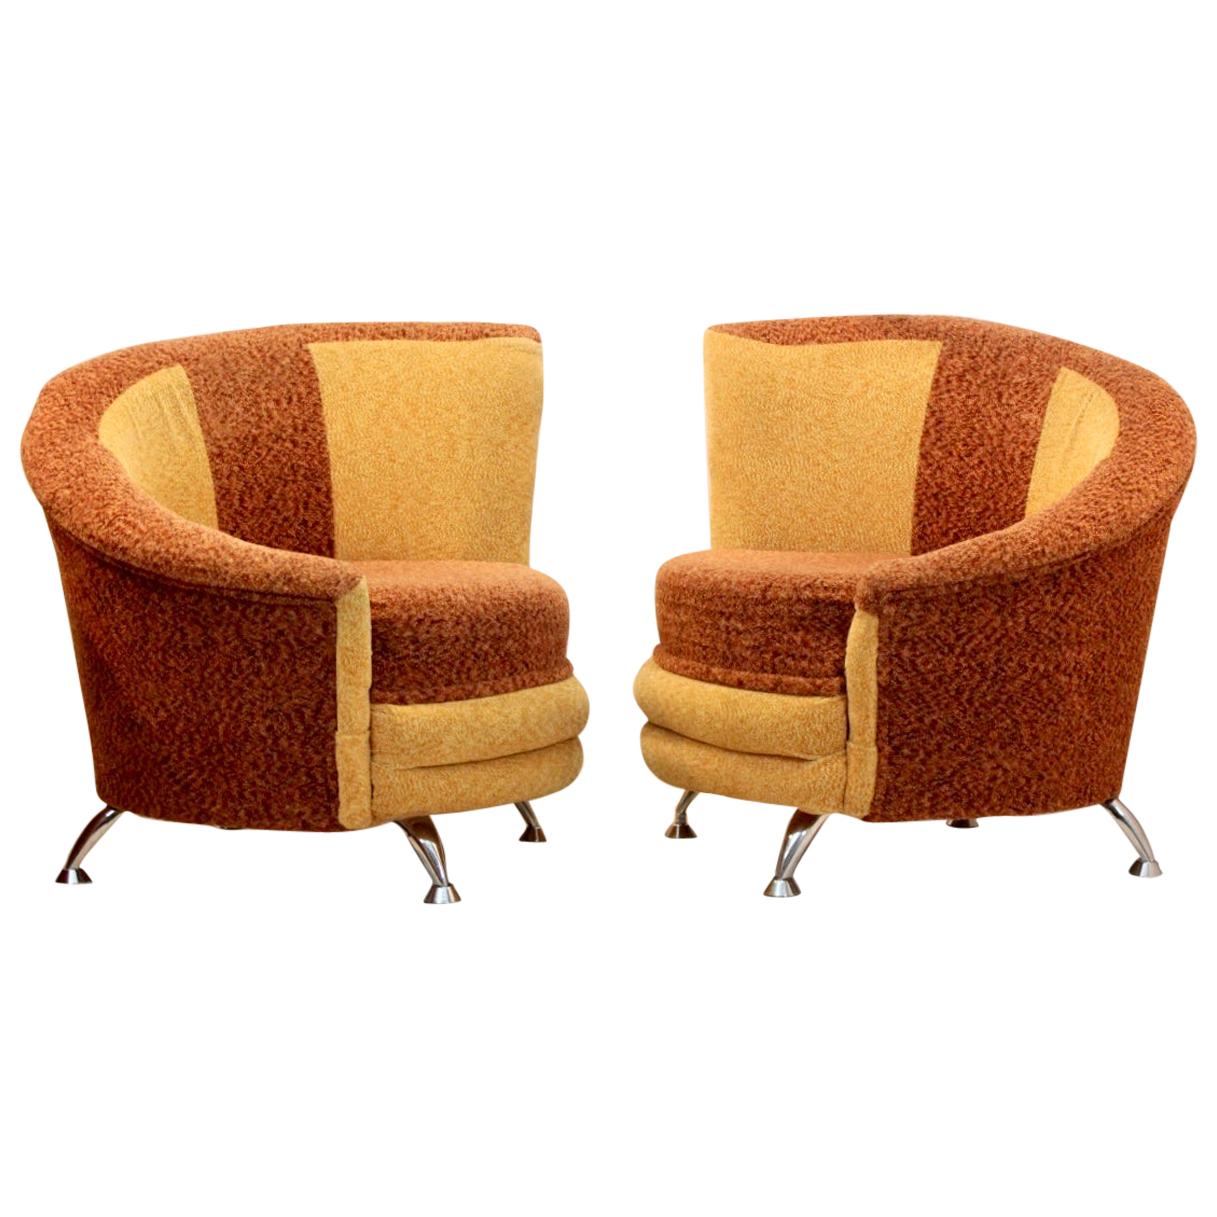 Stunning Pair of Cocktail Chairs by František Jirák for Tatra Nábytok, 1970s